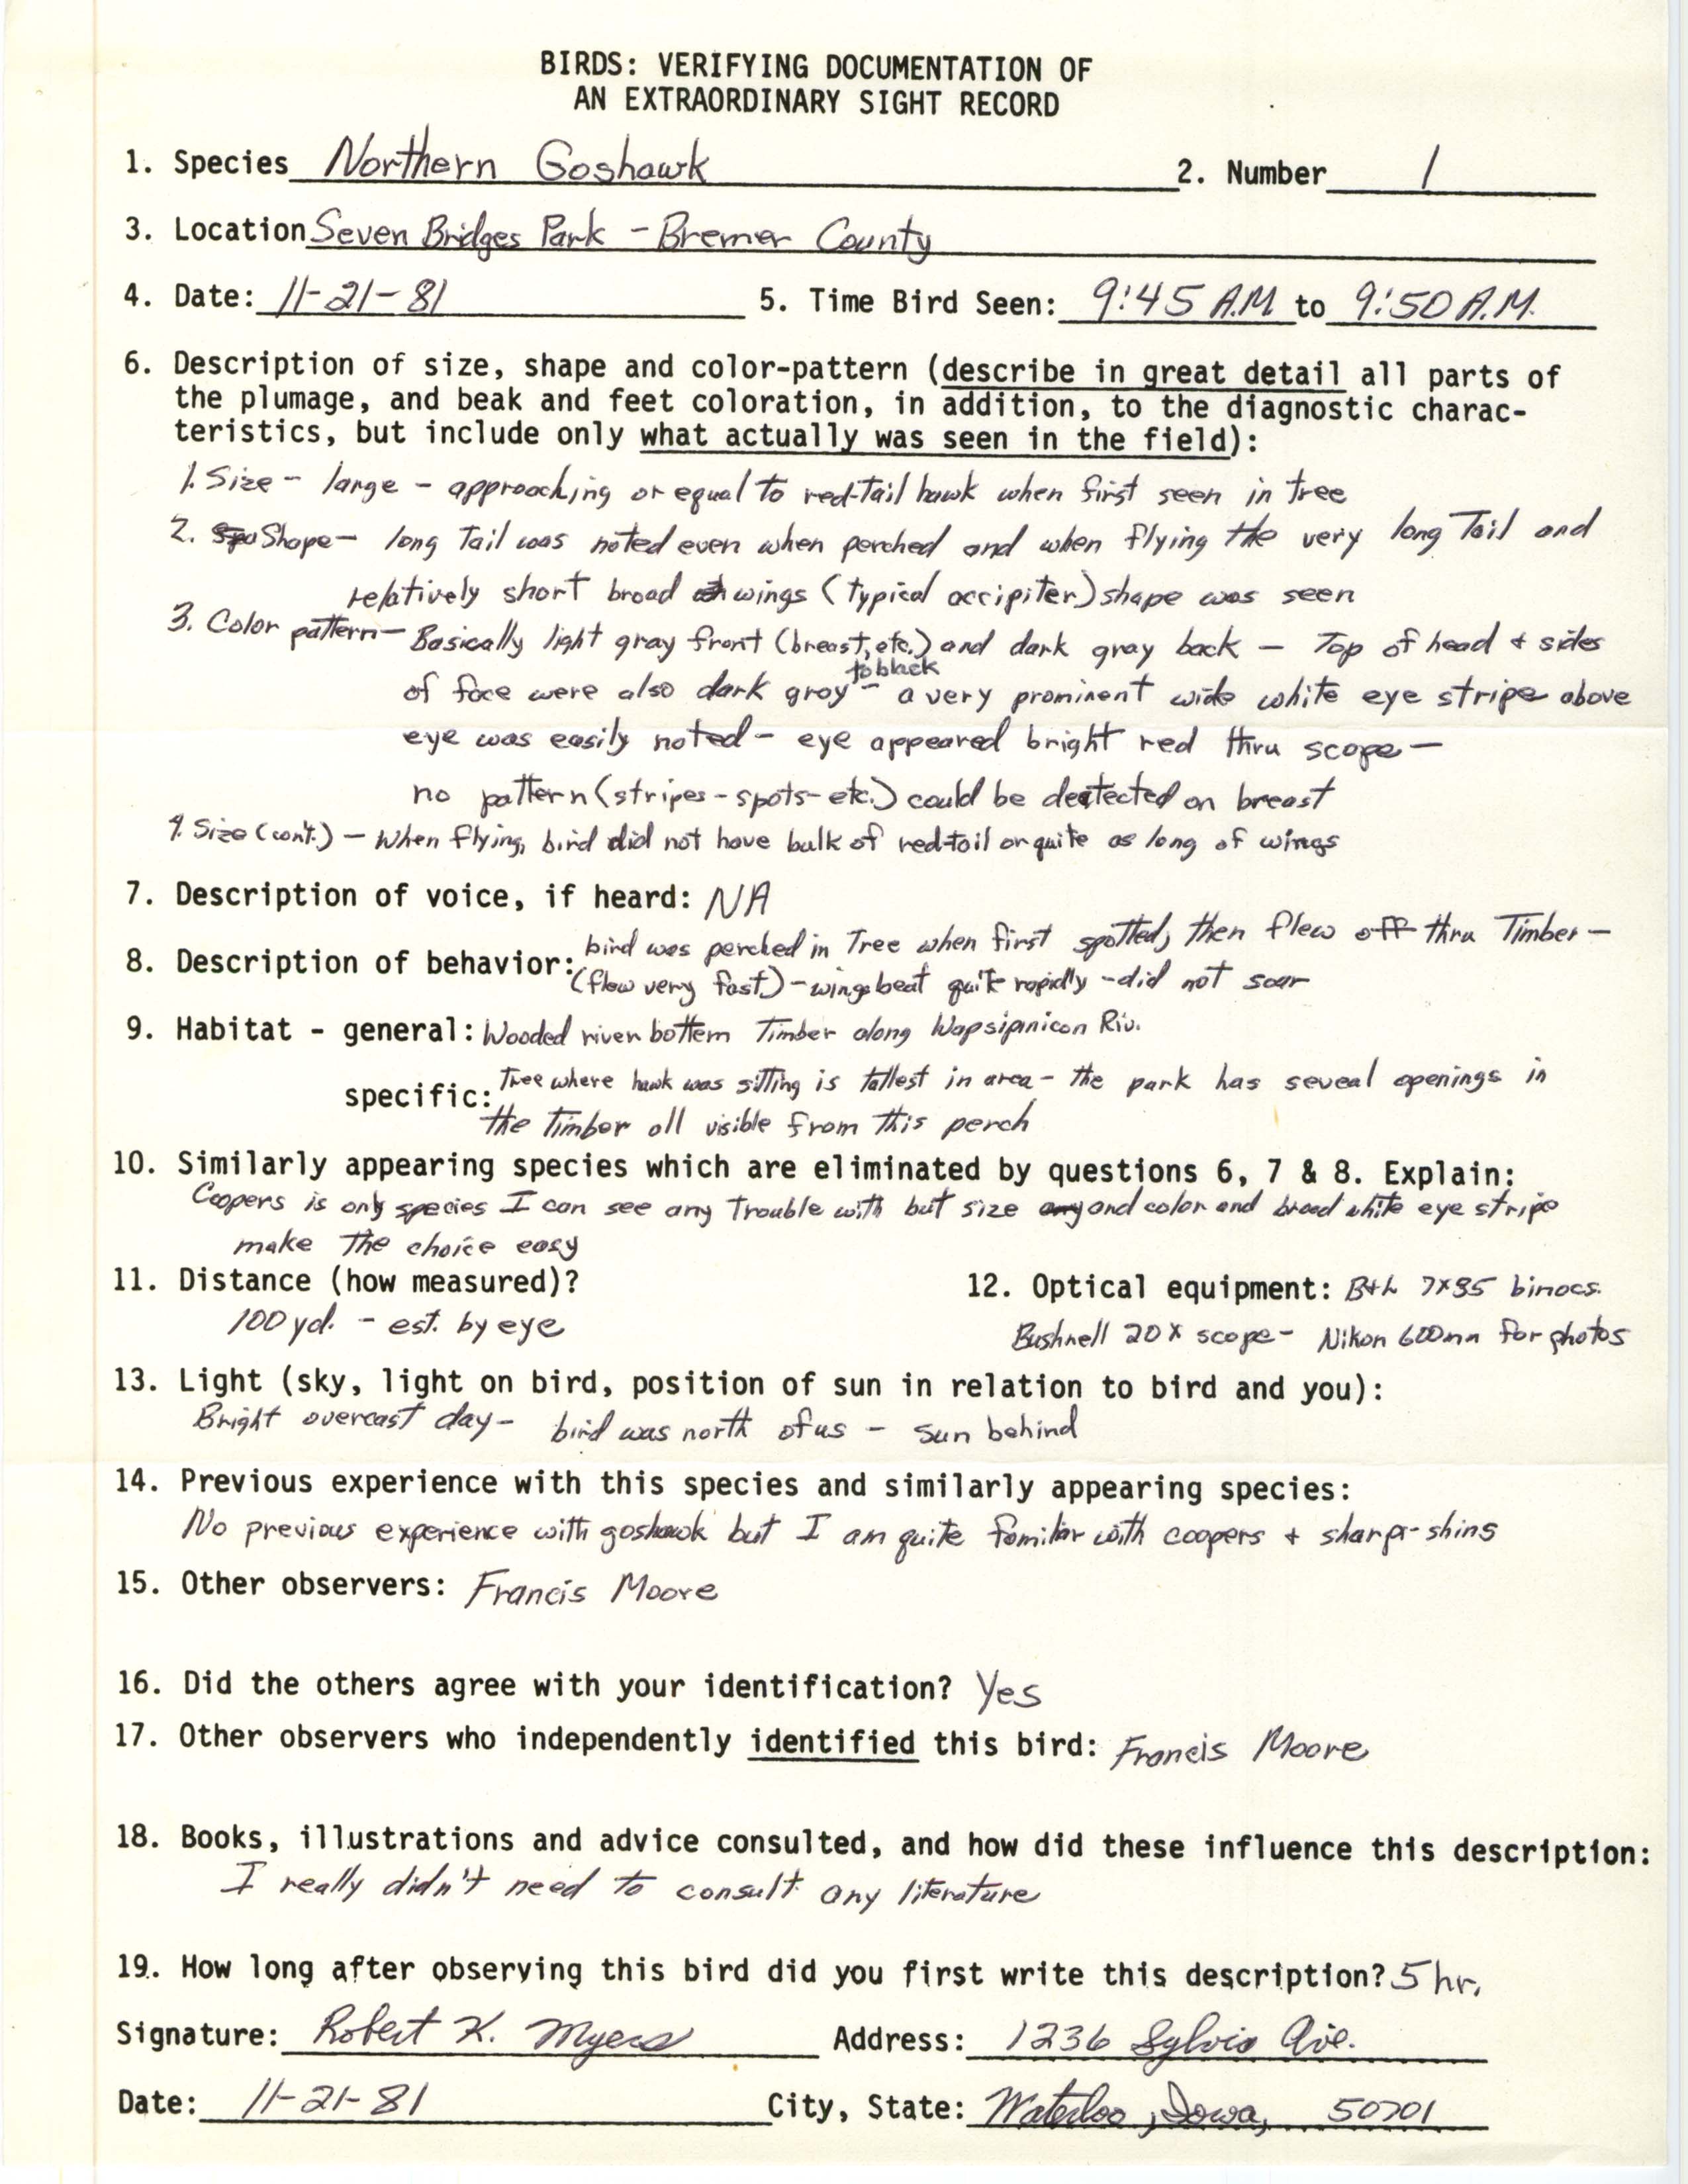 Rare bird documentation form for Northern Goshawk at Seven Bridges Park, 1981